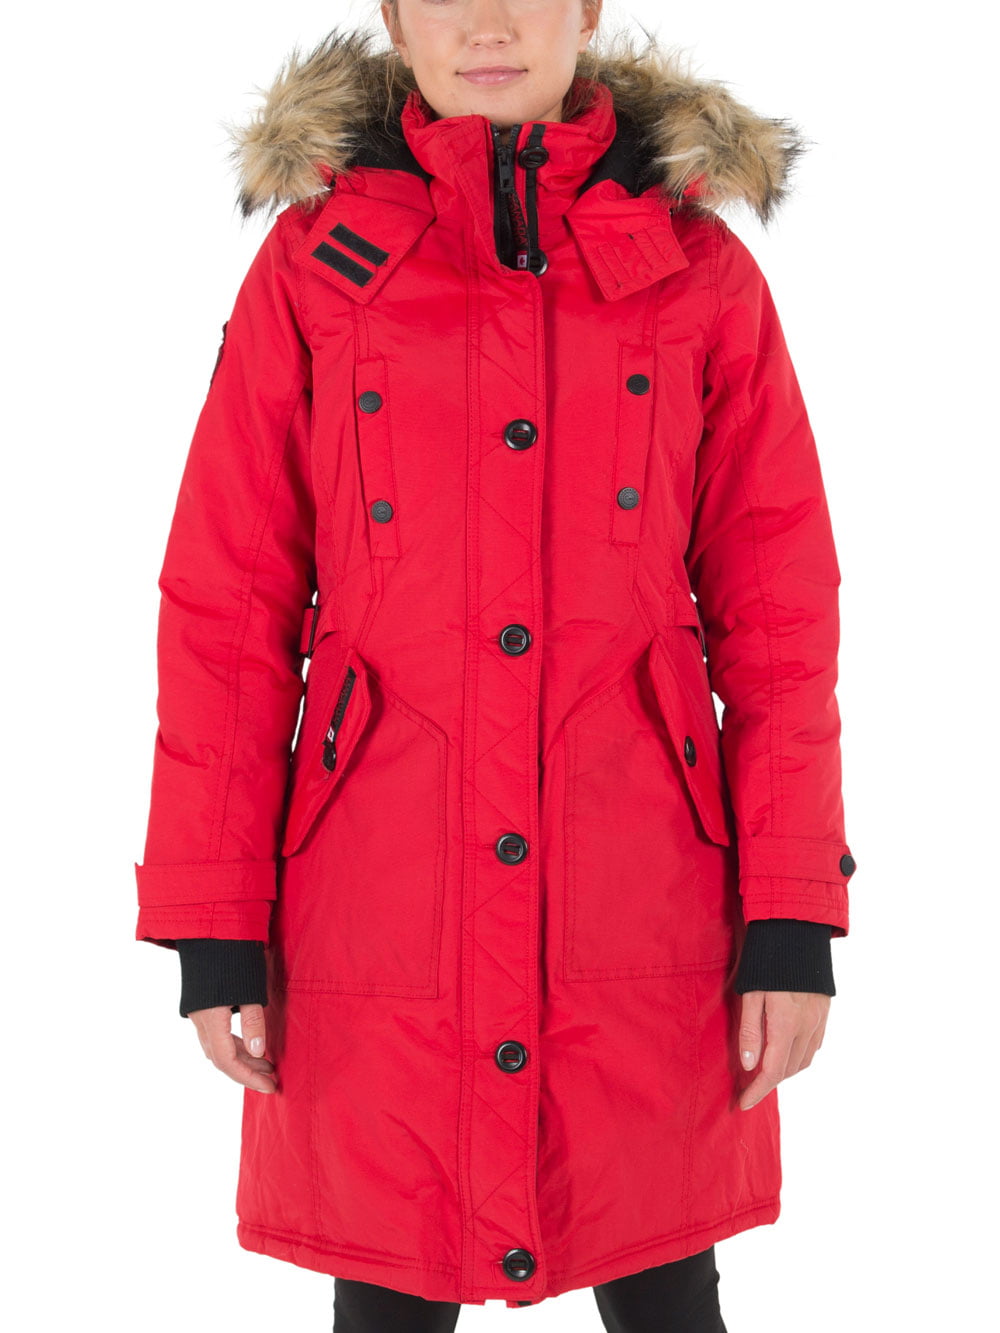 Canada Weather Gear Women's Insulated Parka - red, m - Walmart.com